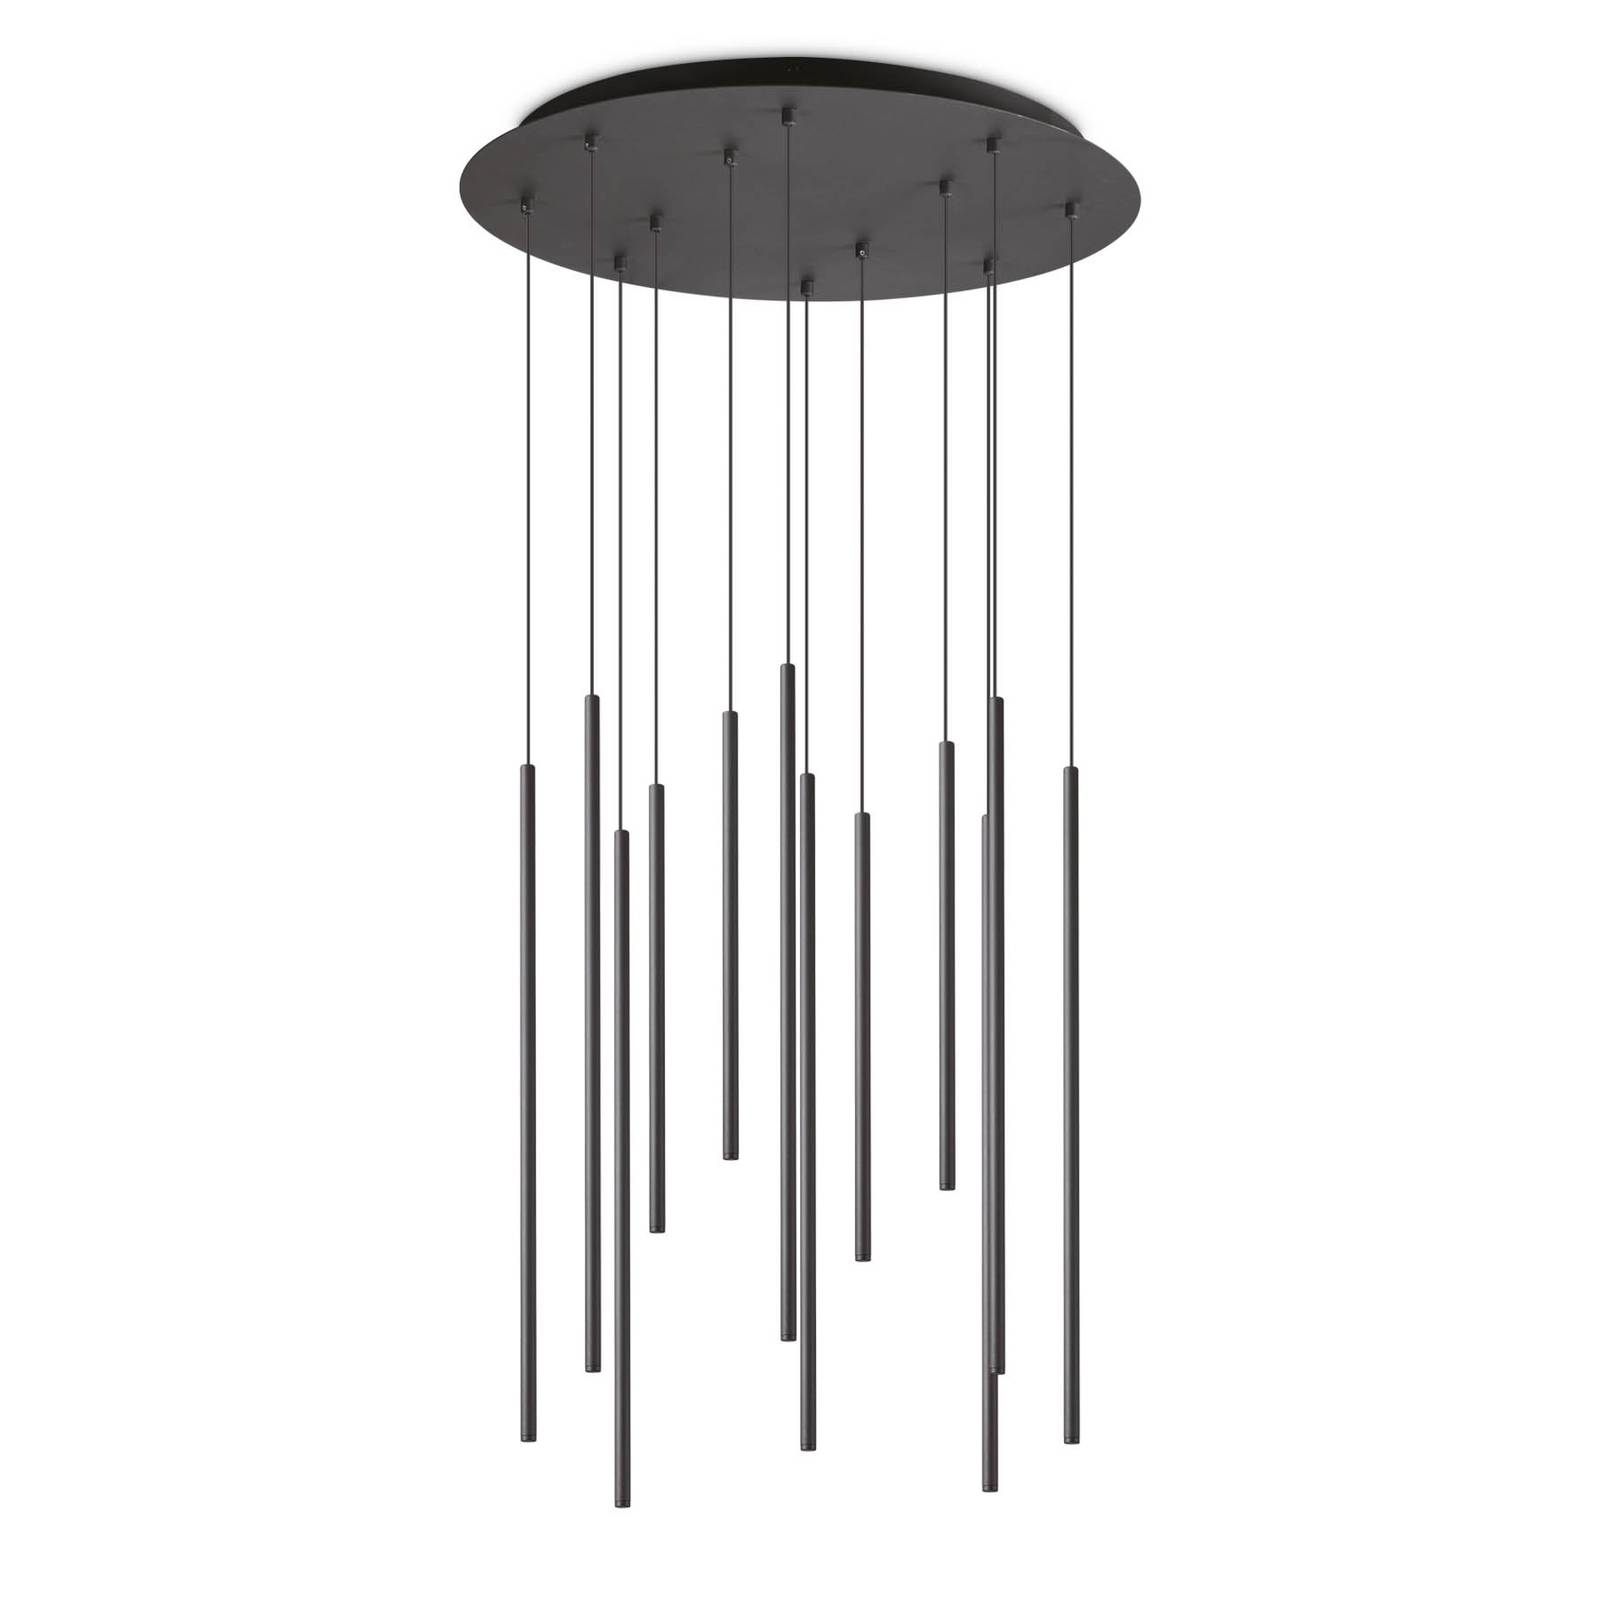 Ideallux ideal lux filo led függő lámpa 12 izzós fekete